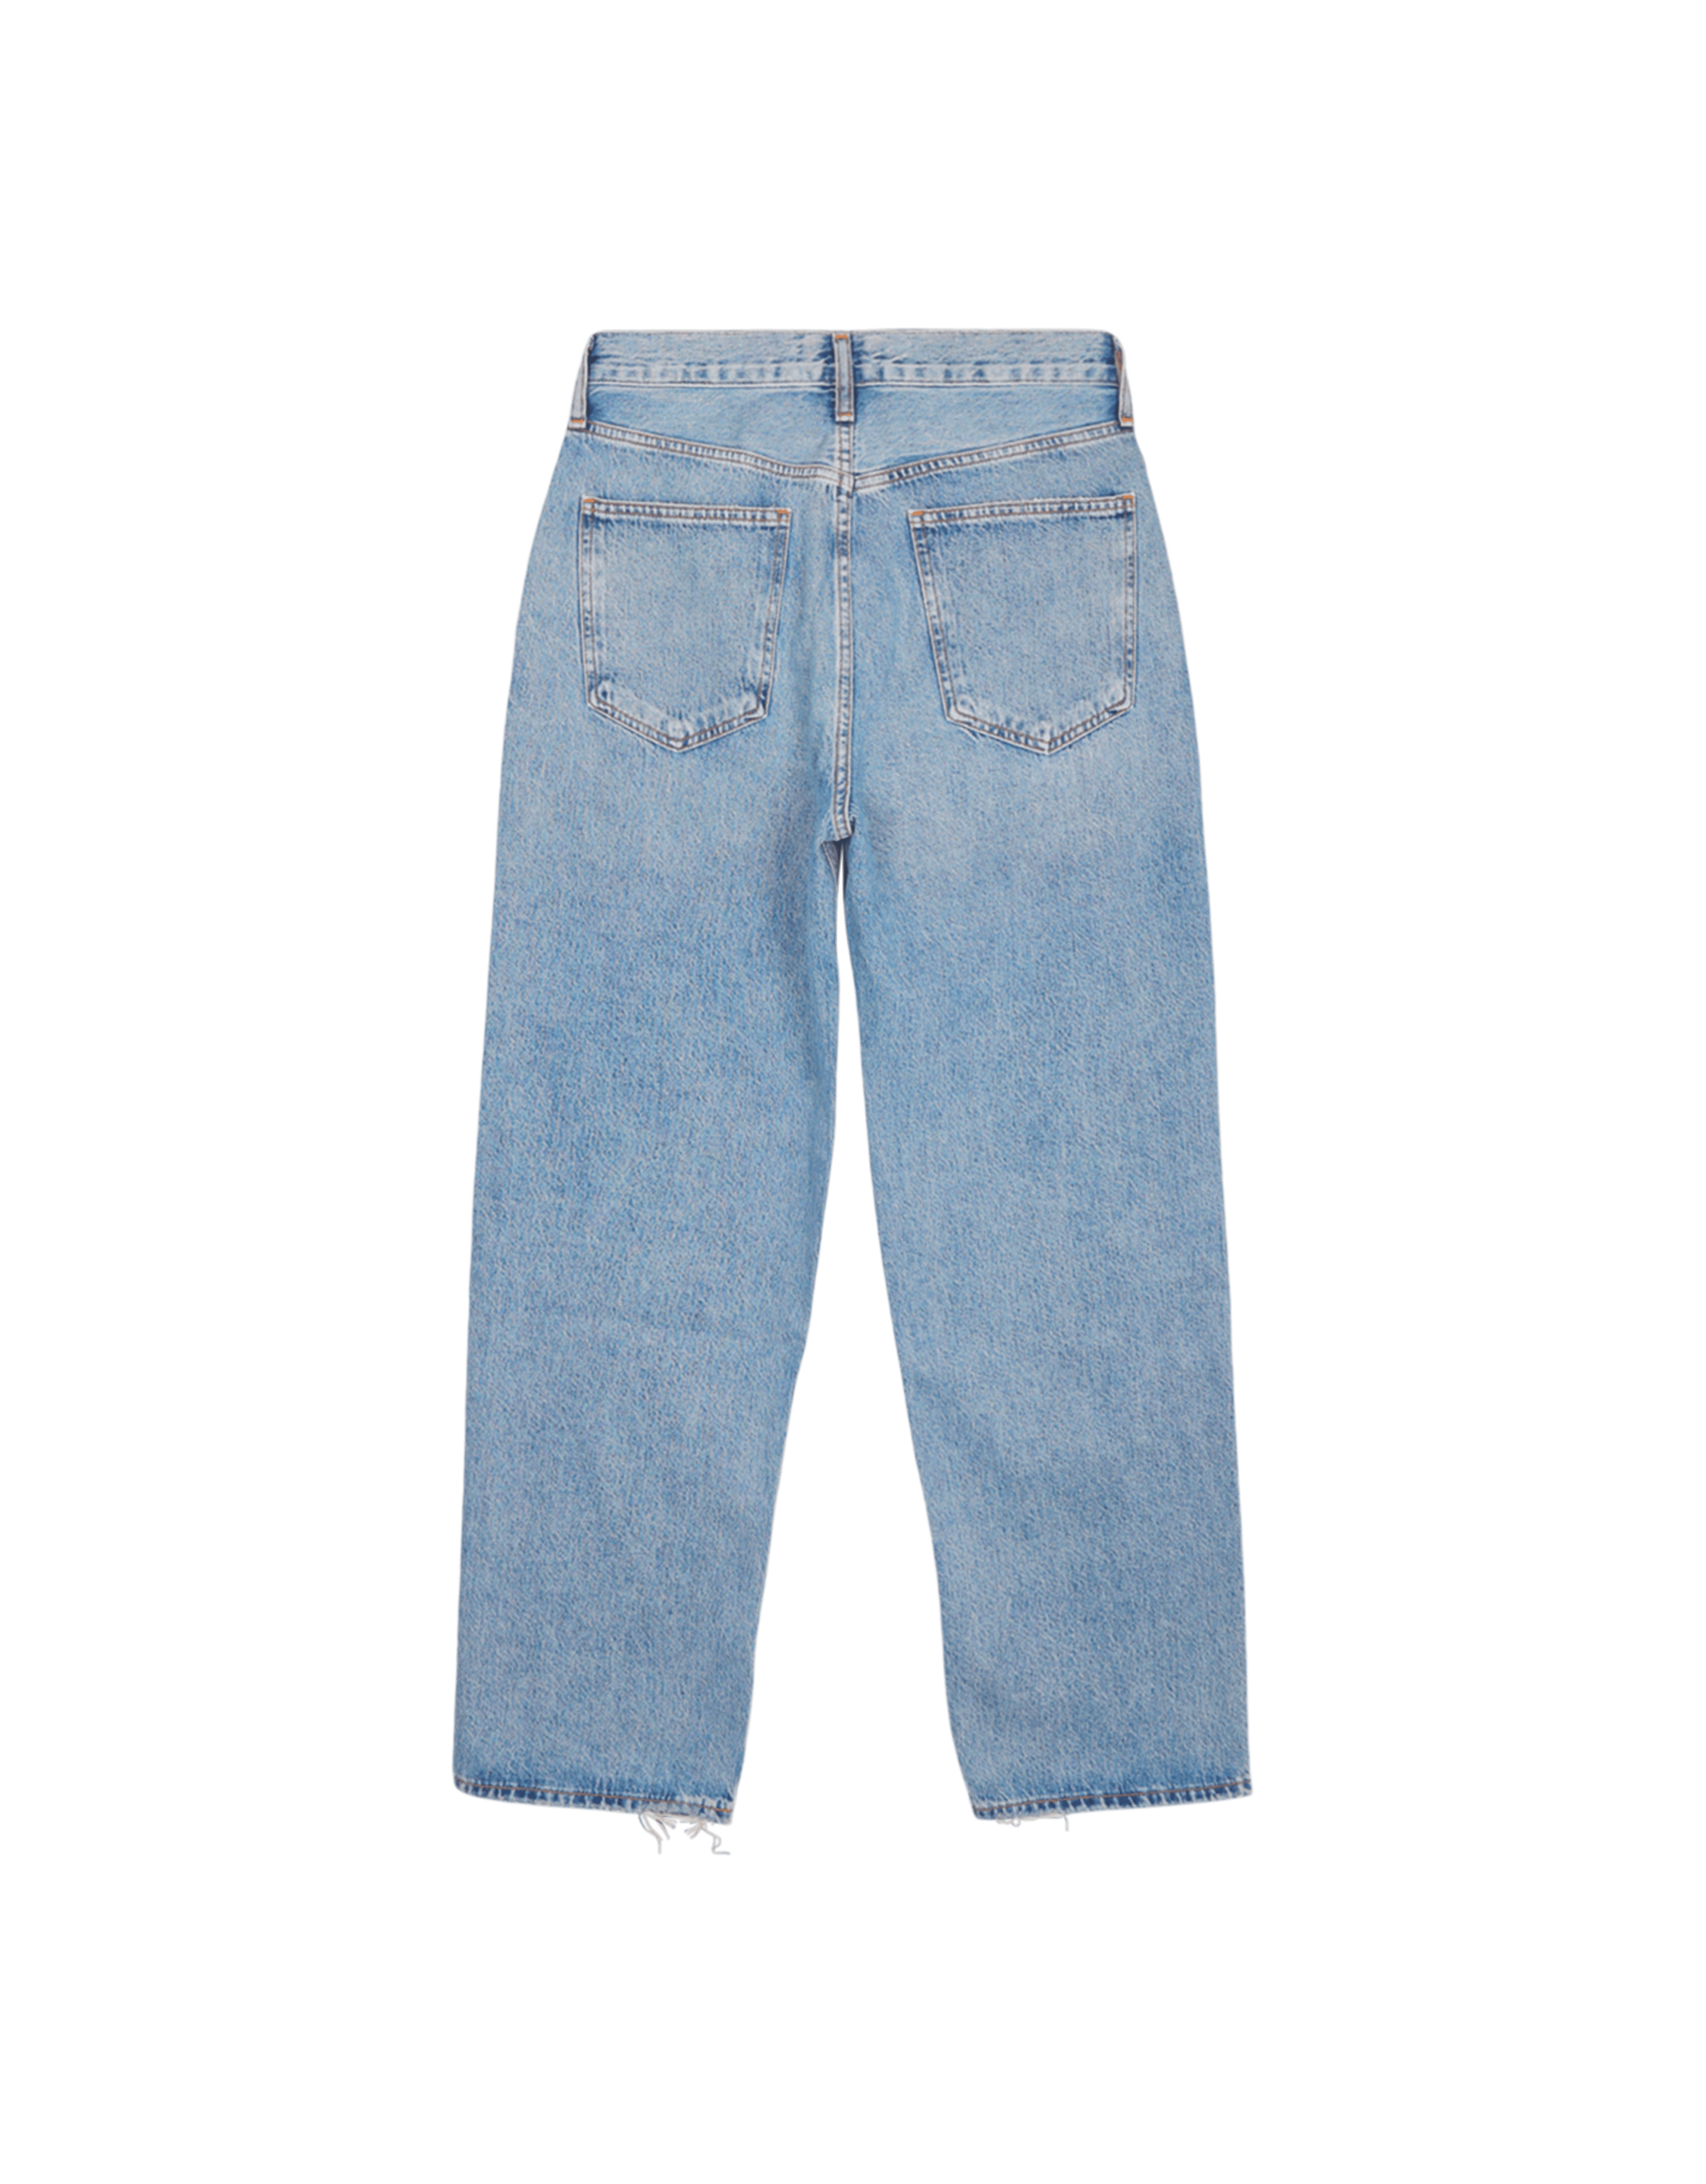 Criss Cross Jeans